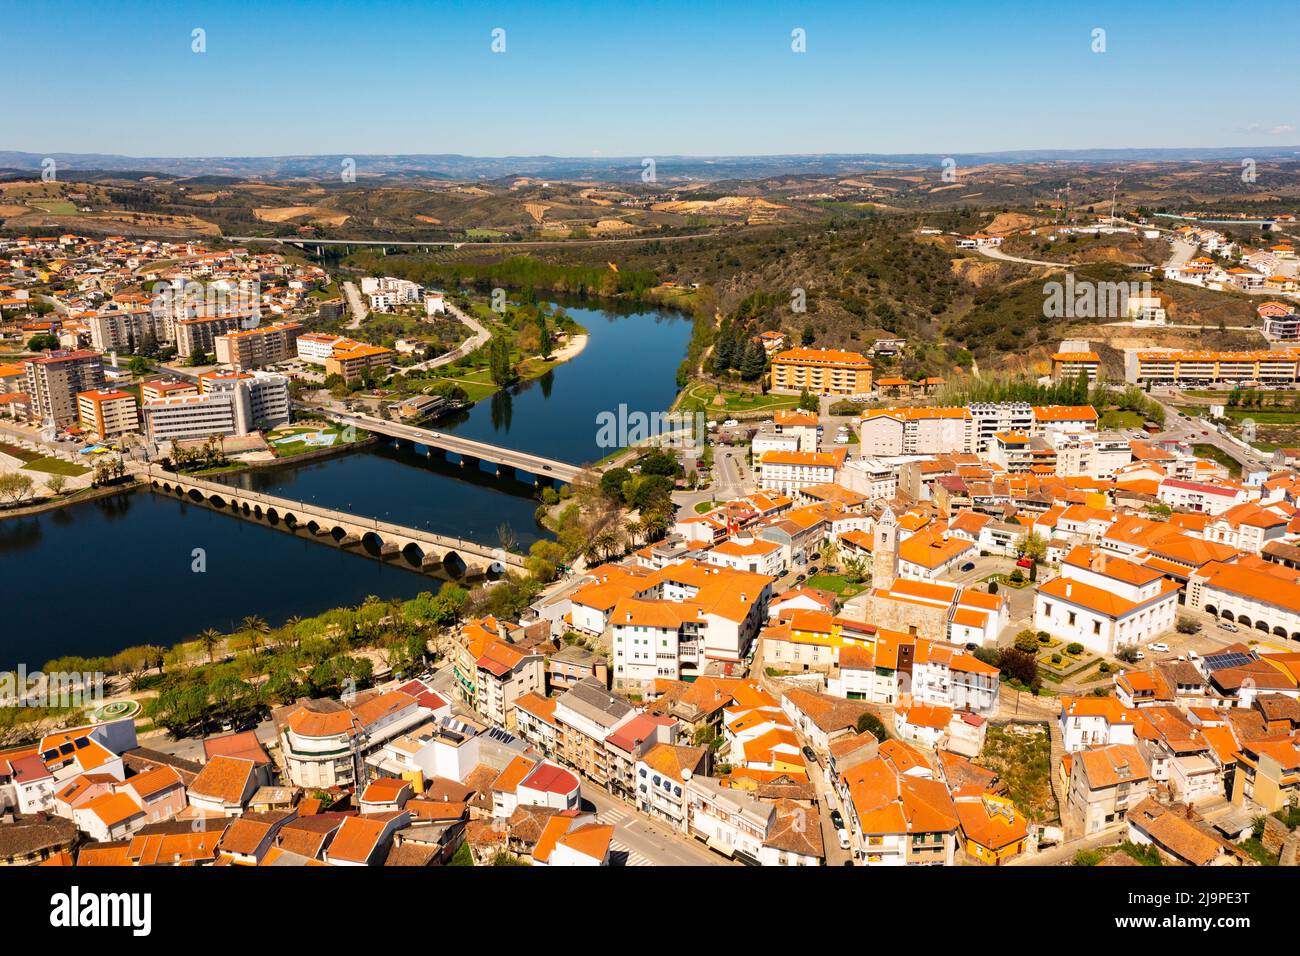 Drone view of Portuguese city of Mirandela on banks of Tua river Stock Photo